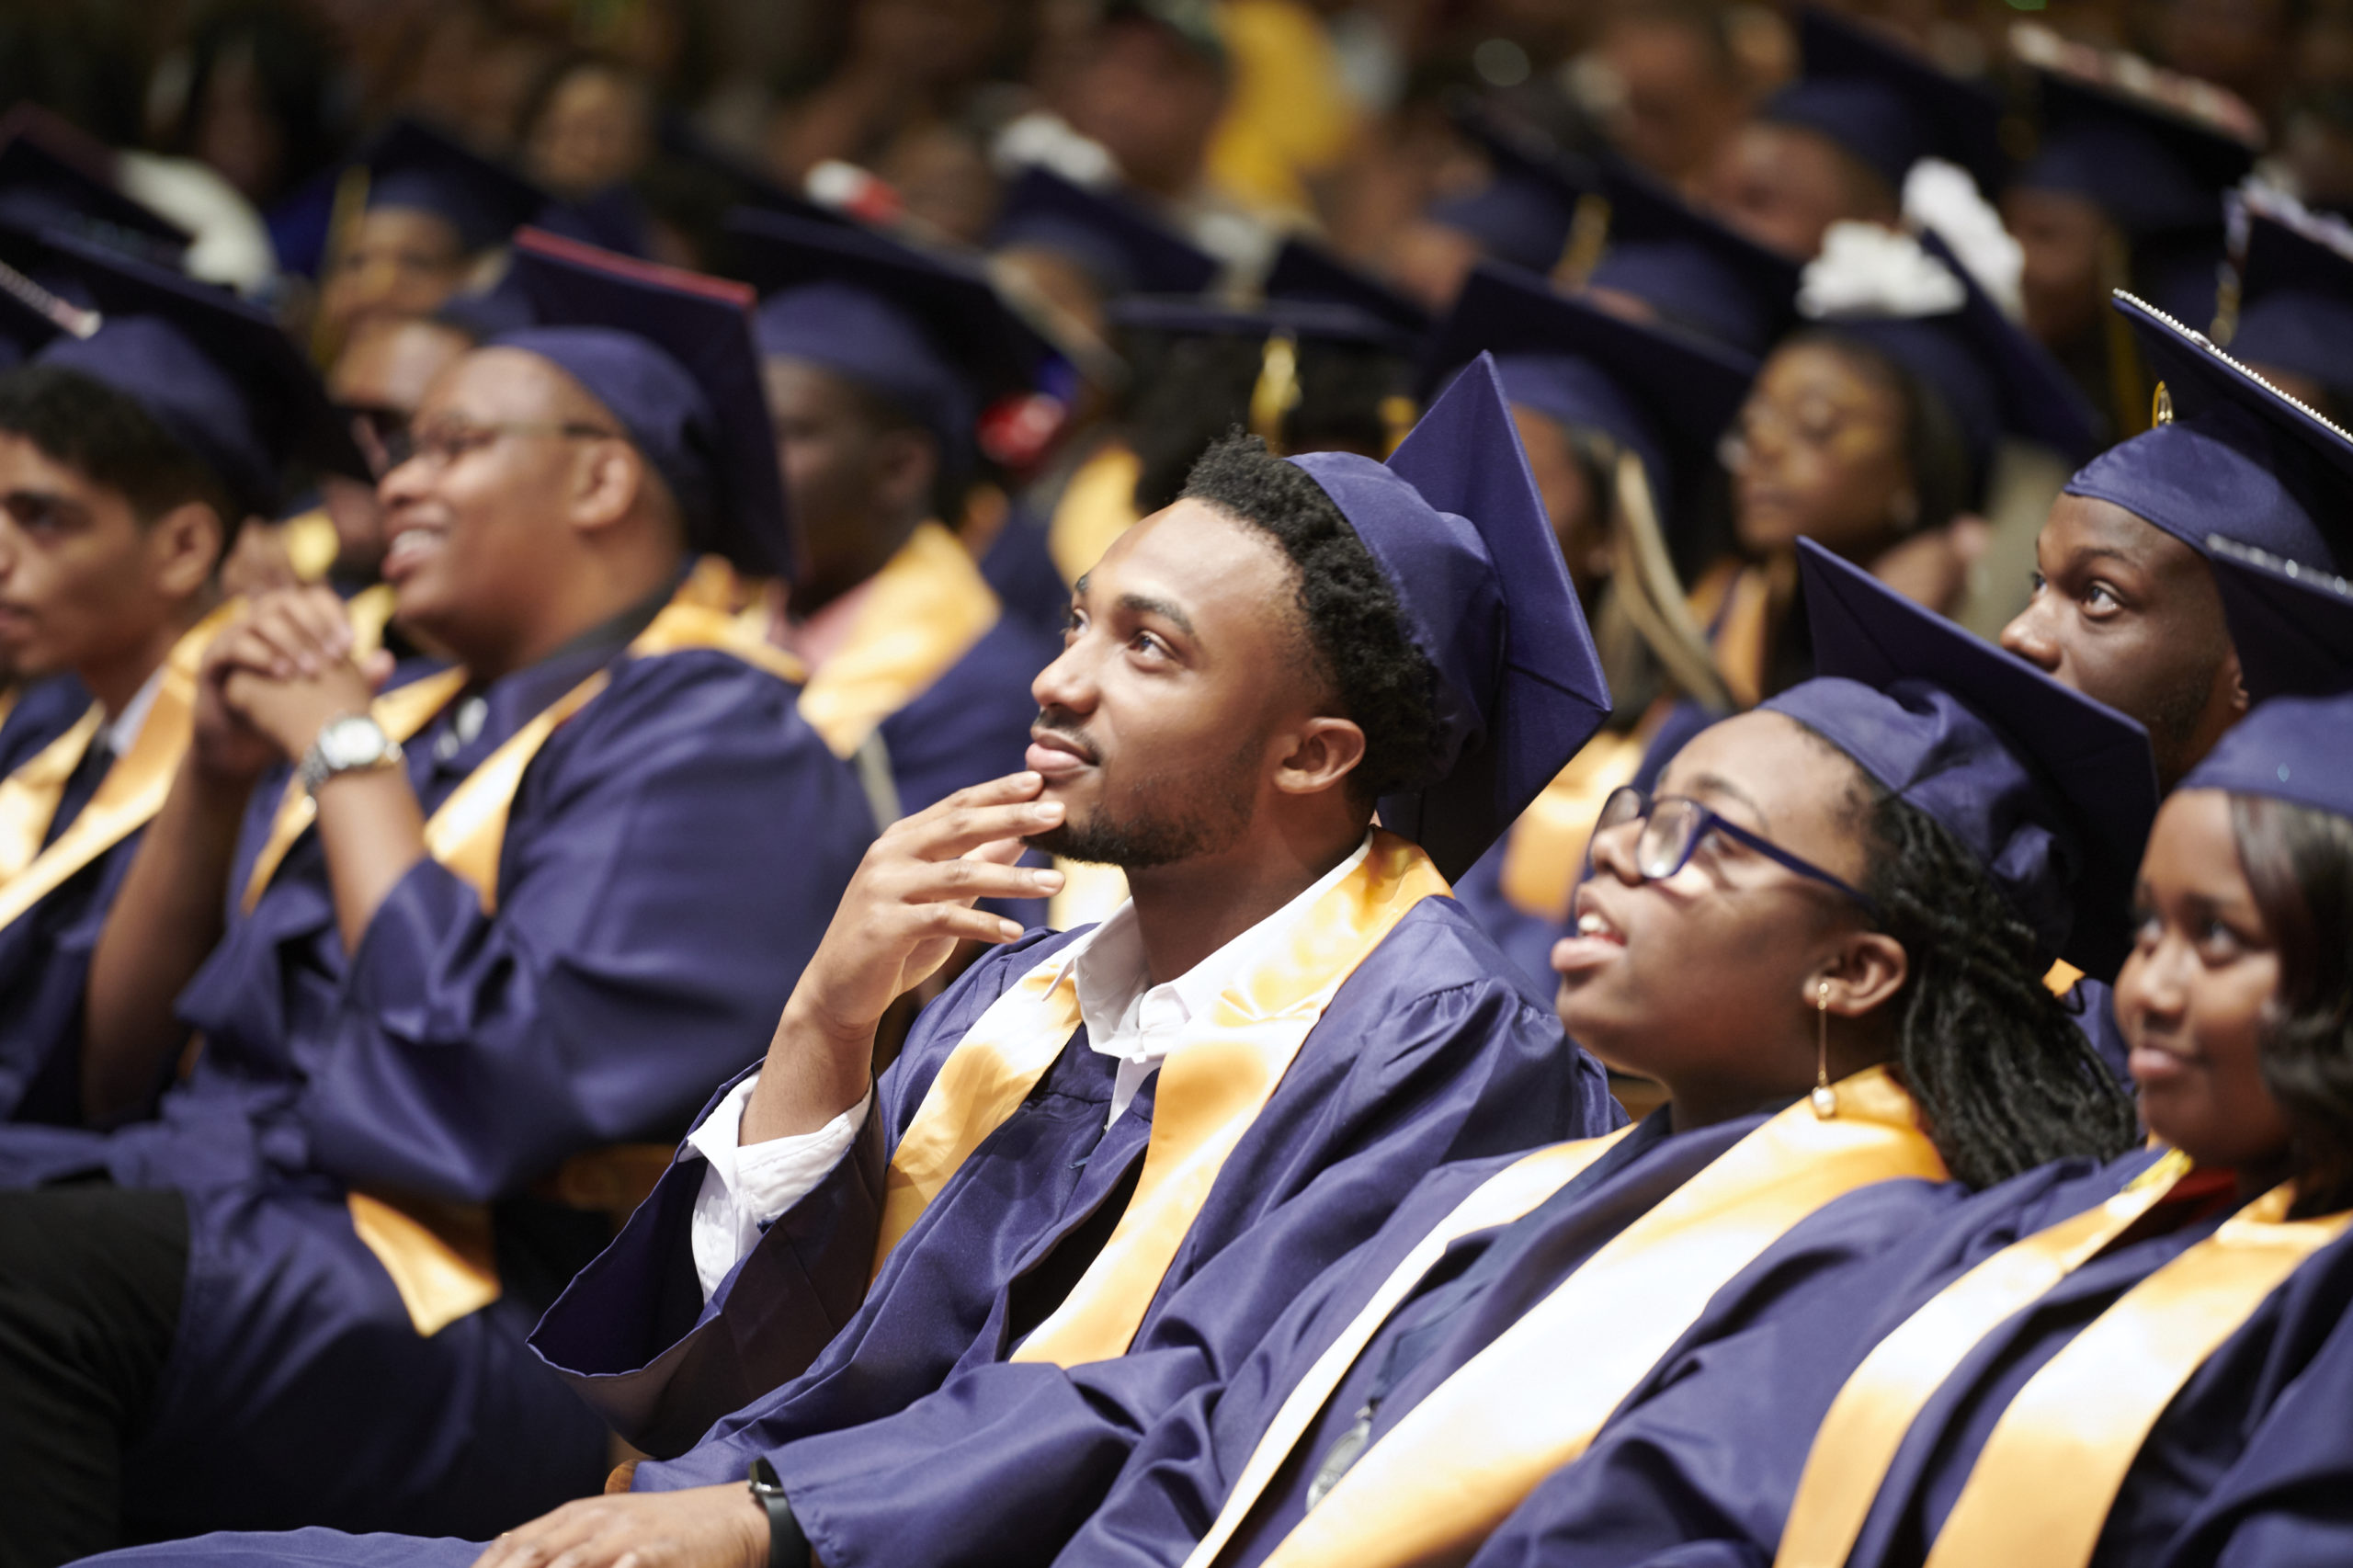 KIPP Philly Graduation 19 students listening